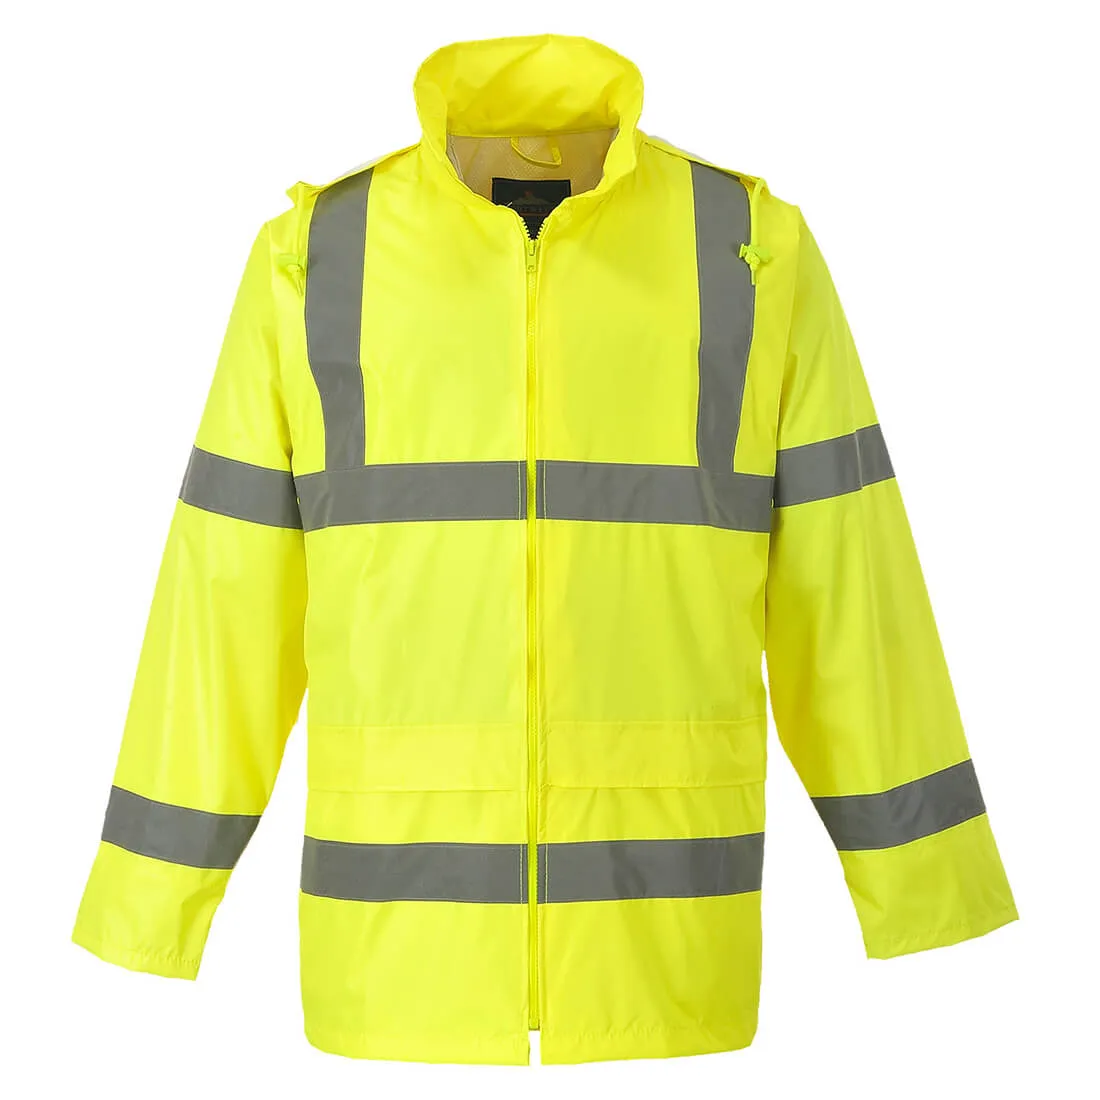 Portwest Hi Vis Rain Jacket - Yellow, 3XL